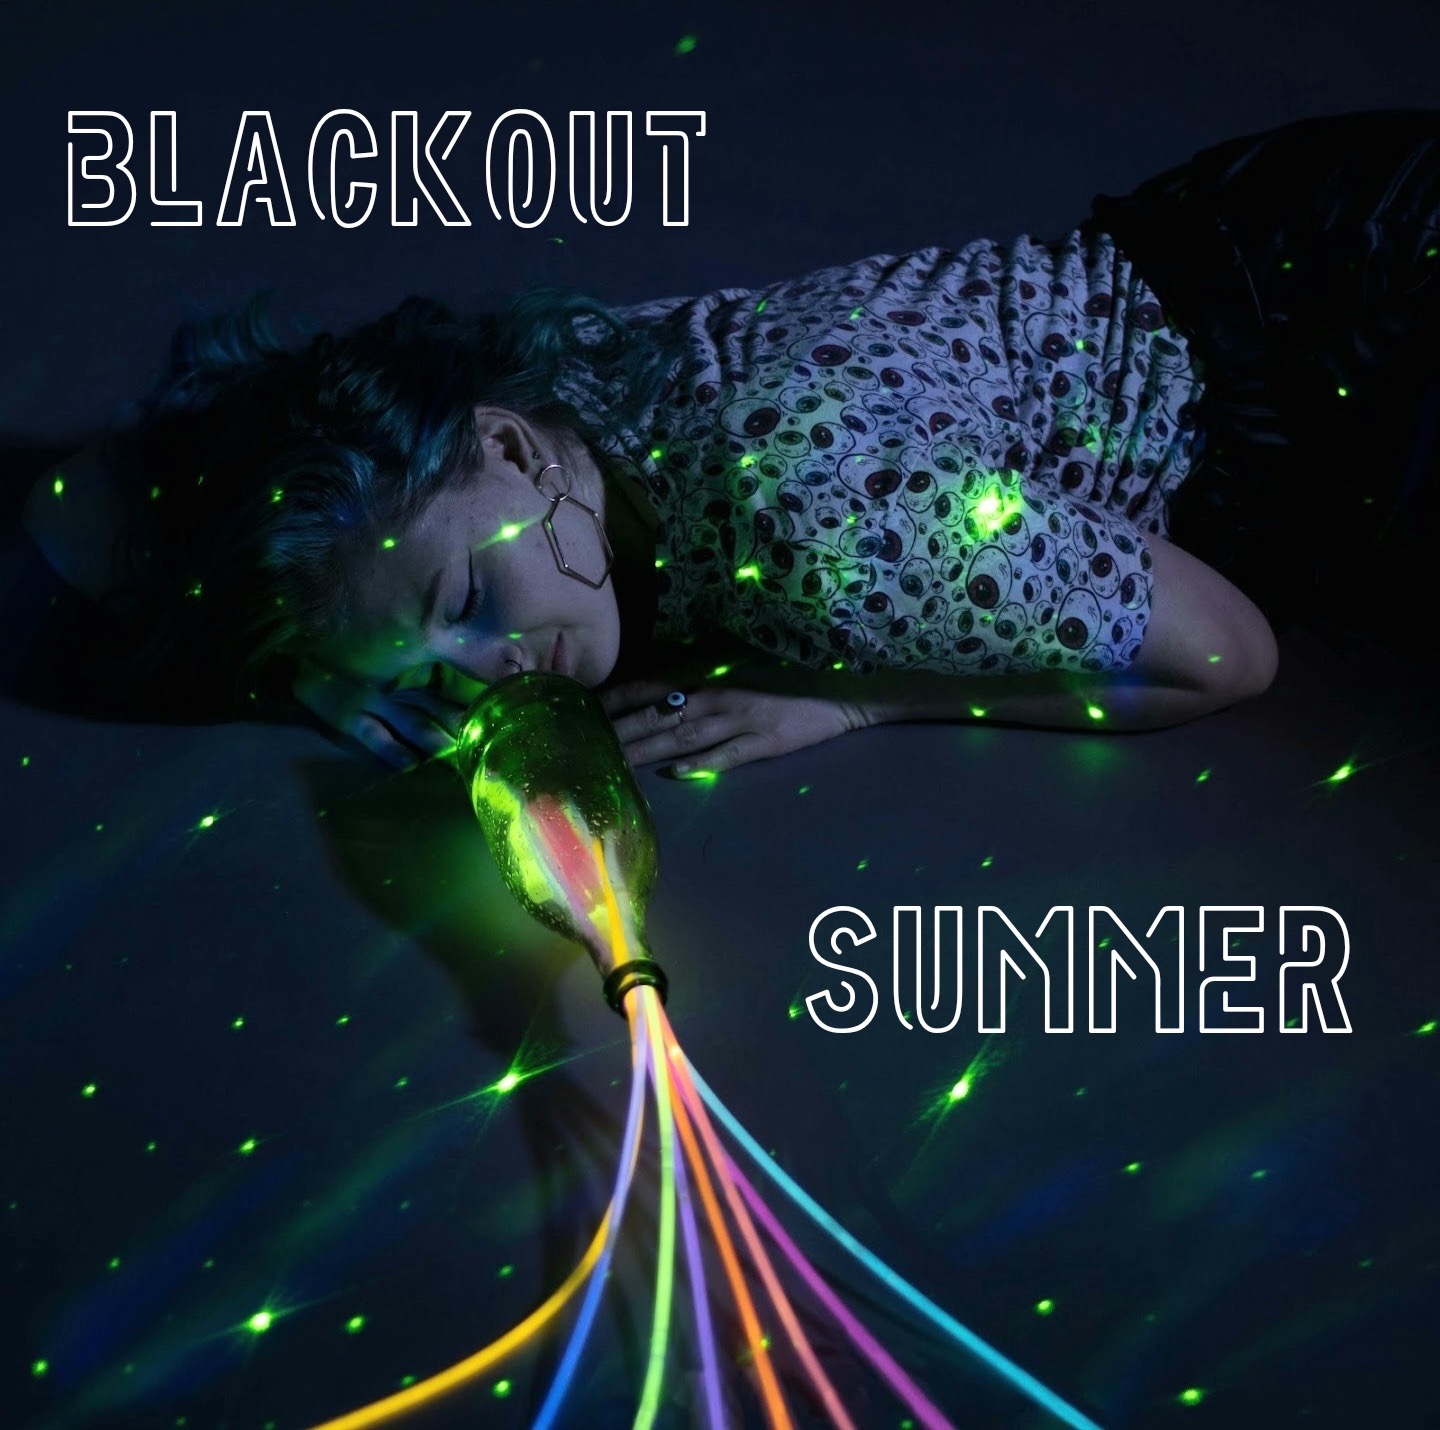 BLACKOUT SUMMER song cover art